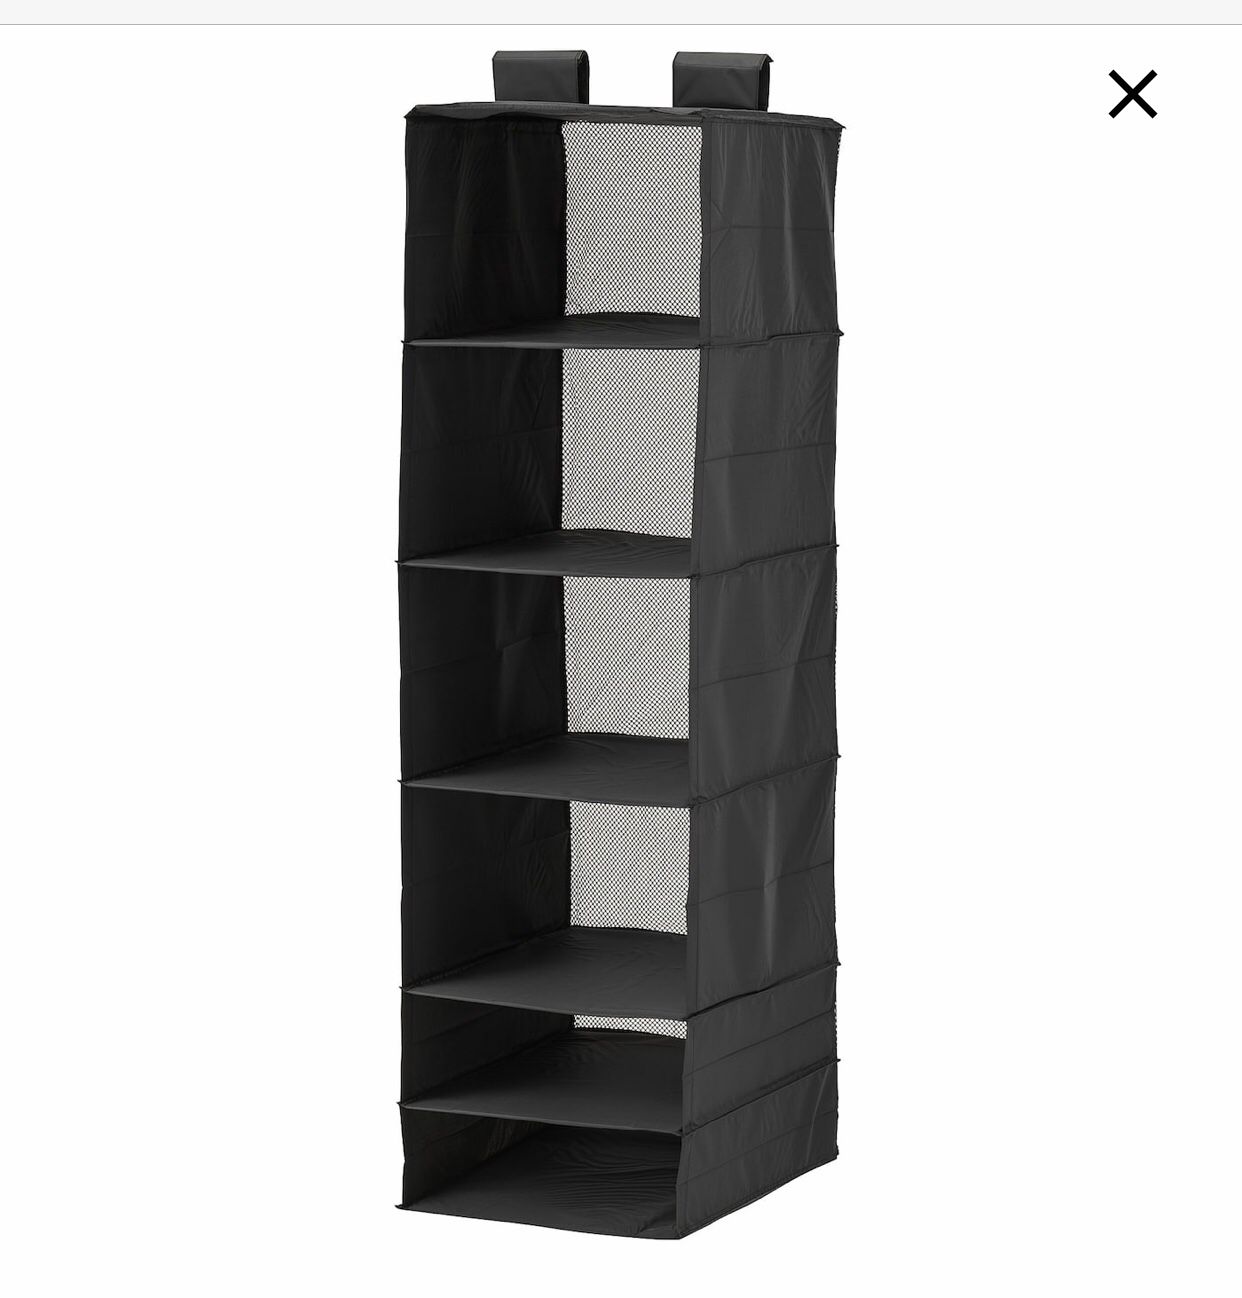 Ikea Closet Organizer, Hanging Storage Clothes Cubes